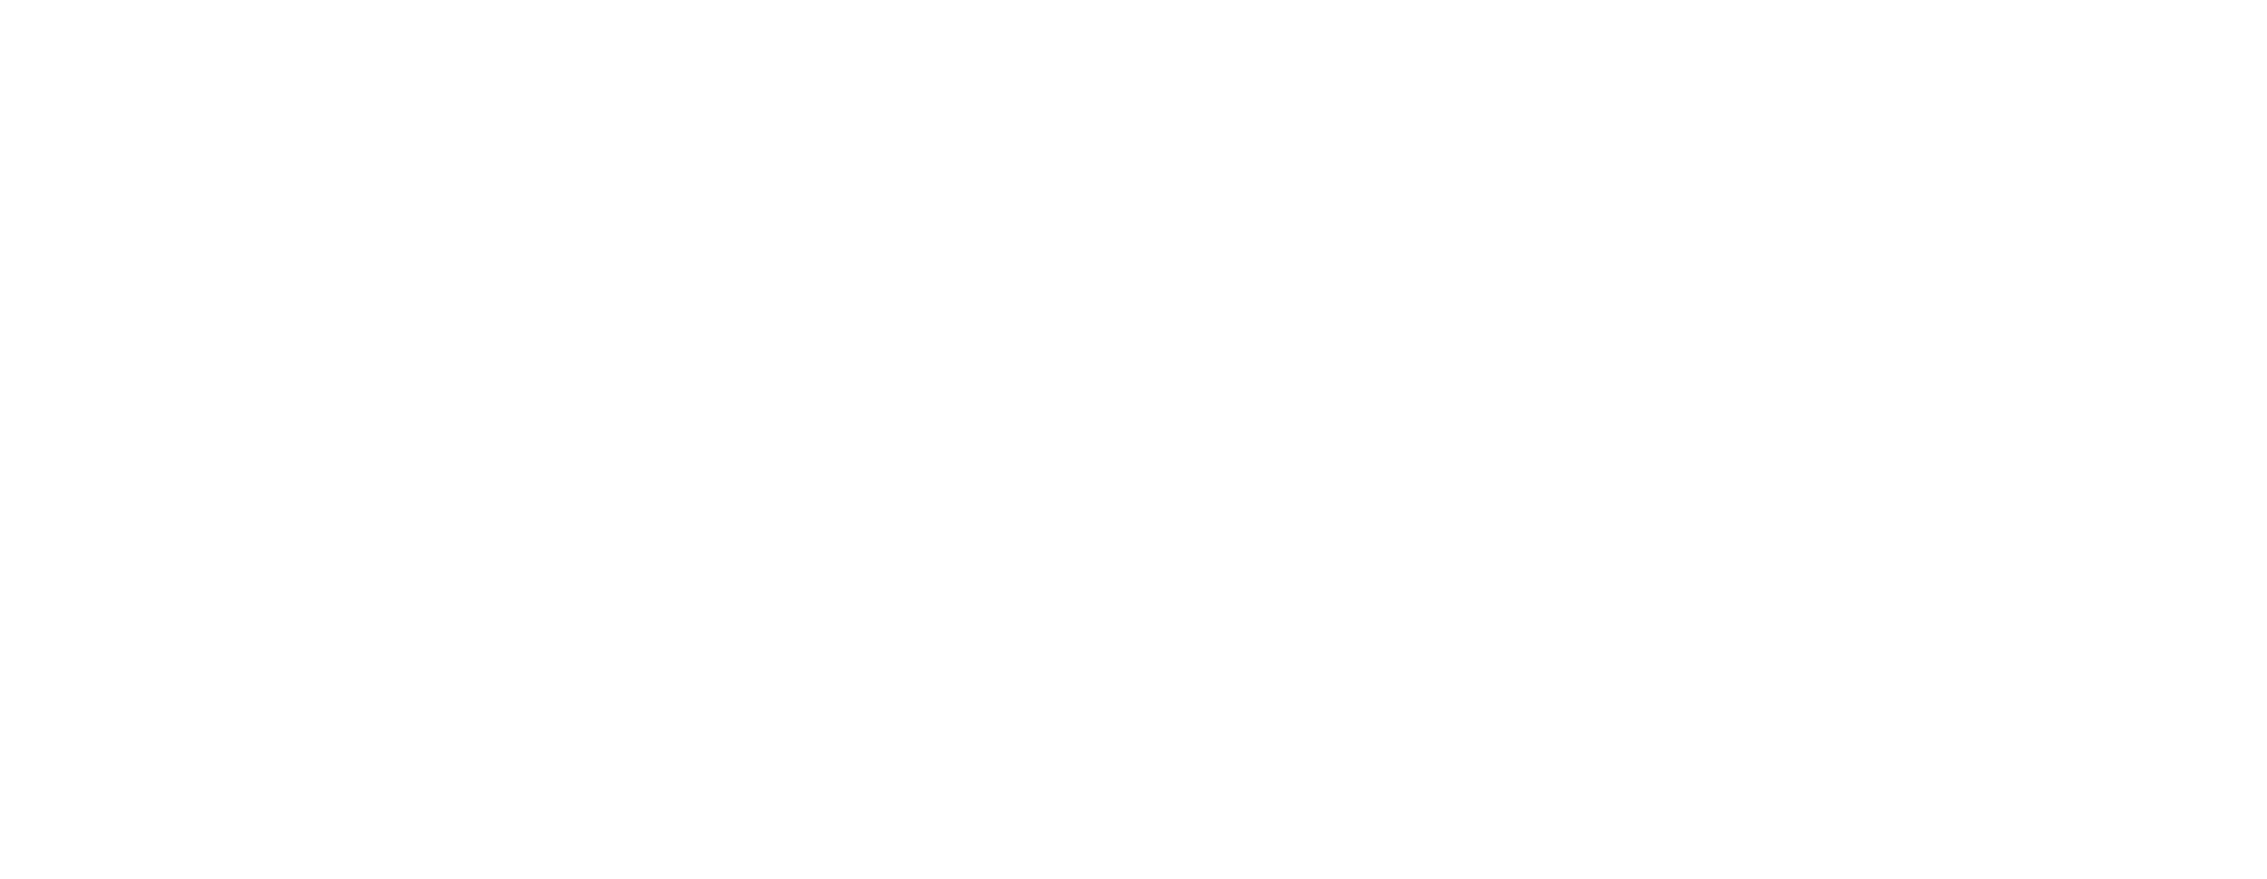 STEELSERIES ENGINE 3 logo